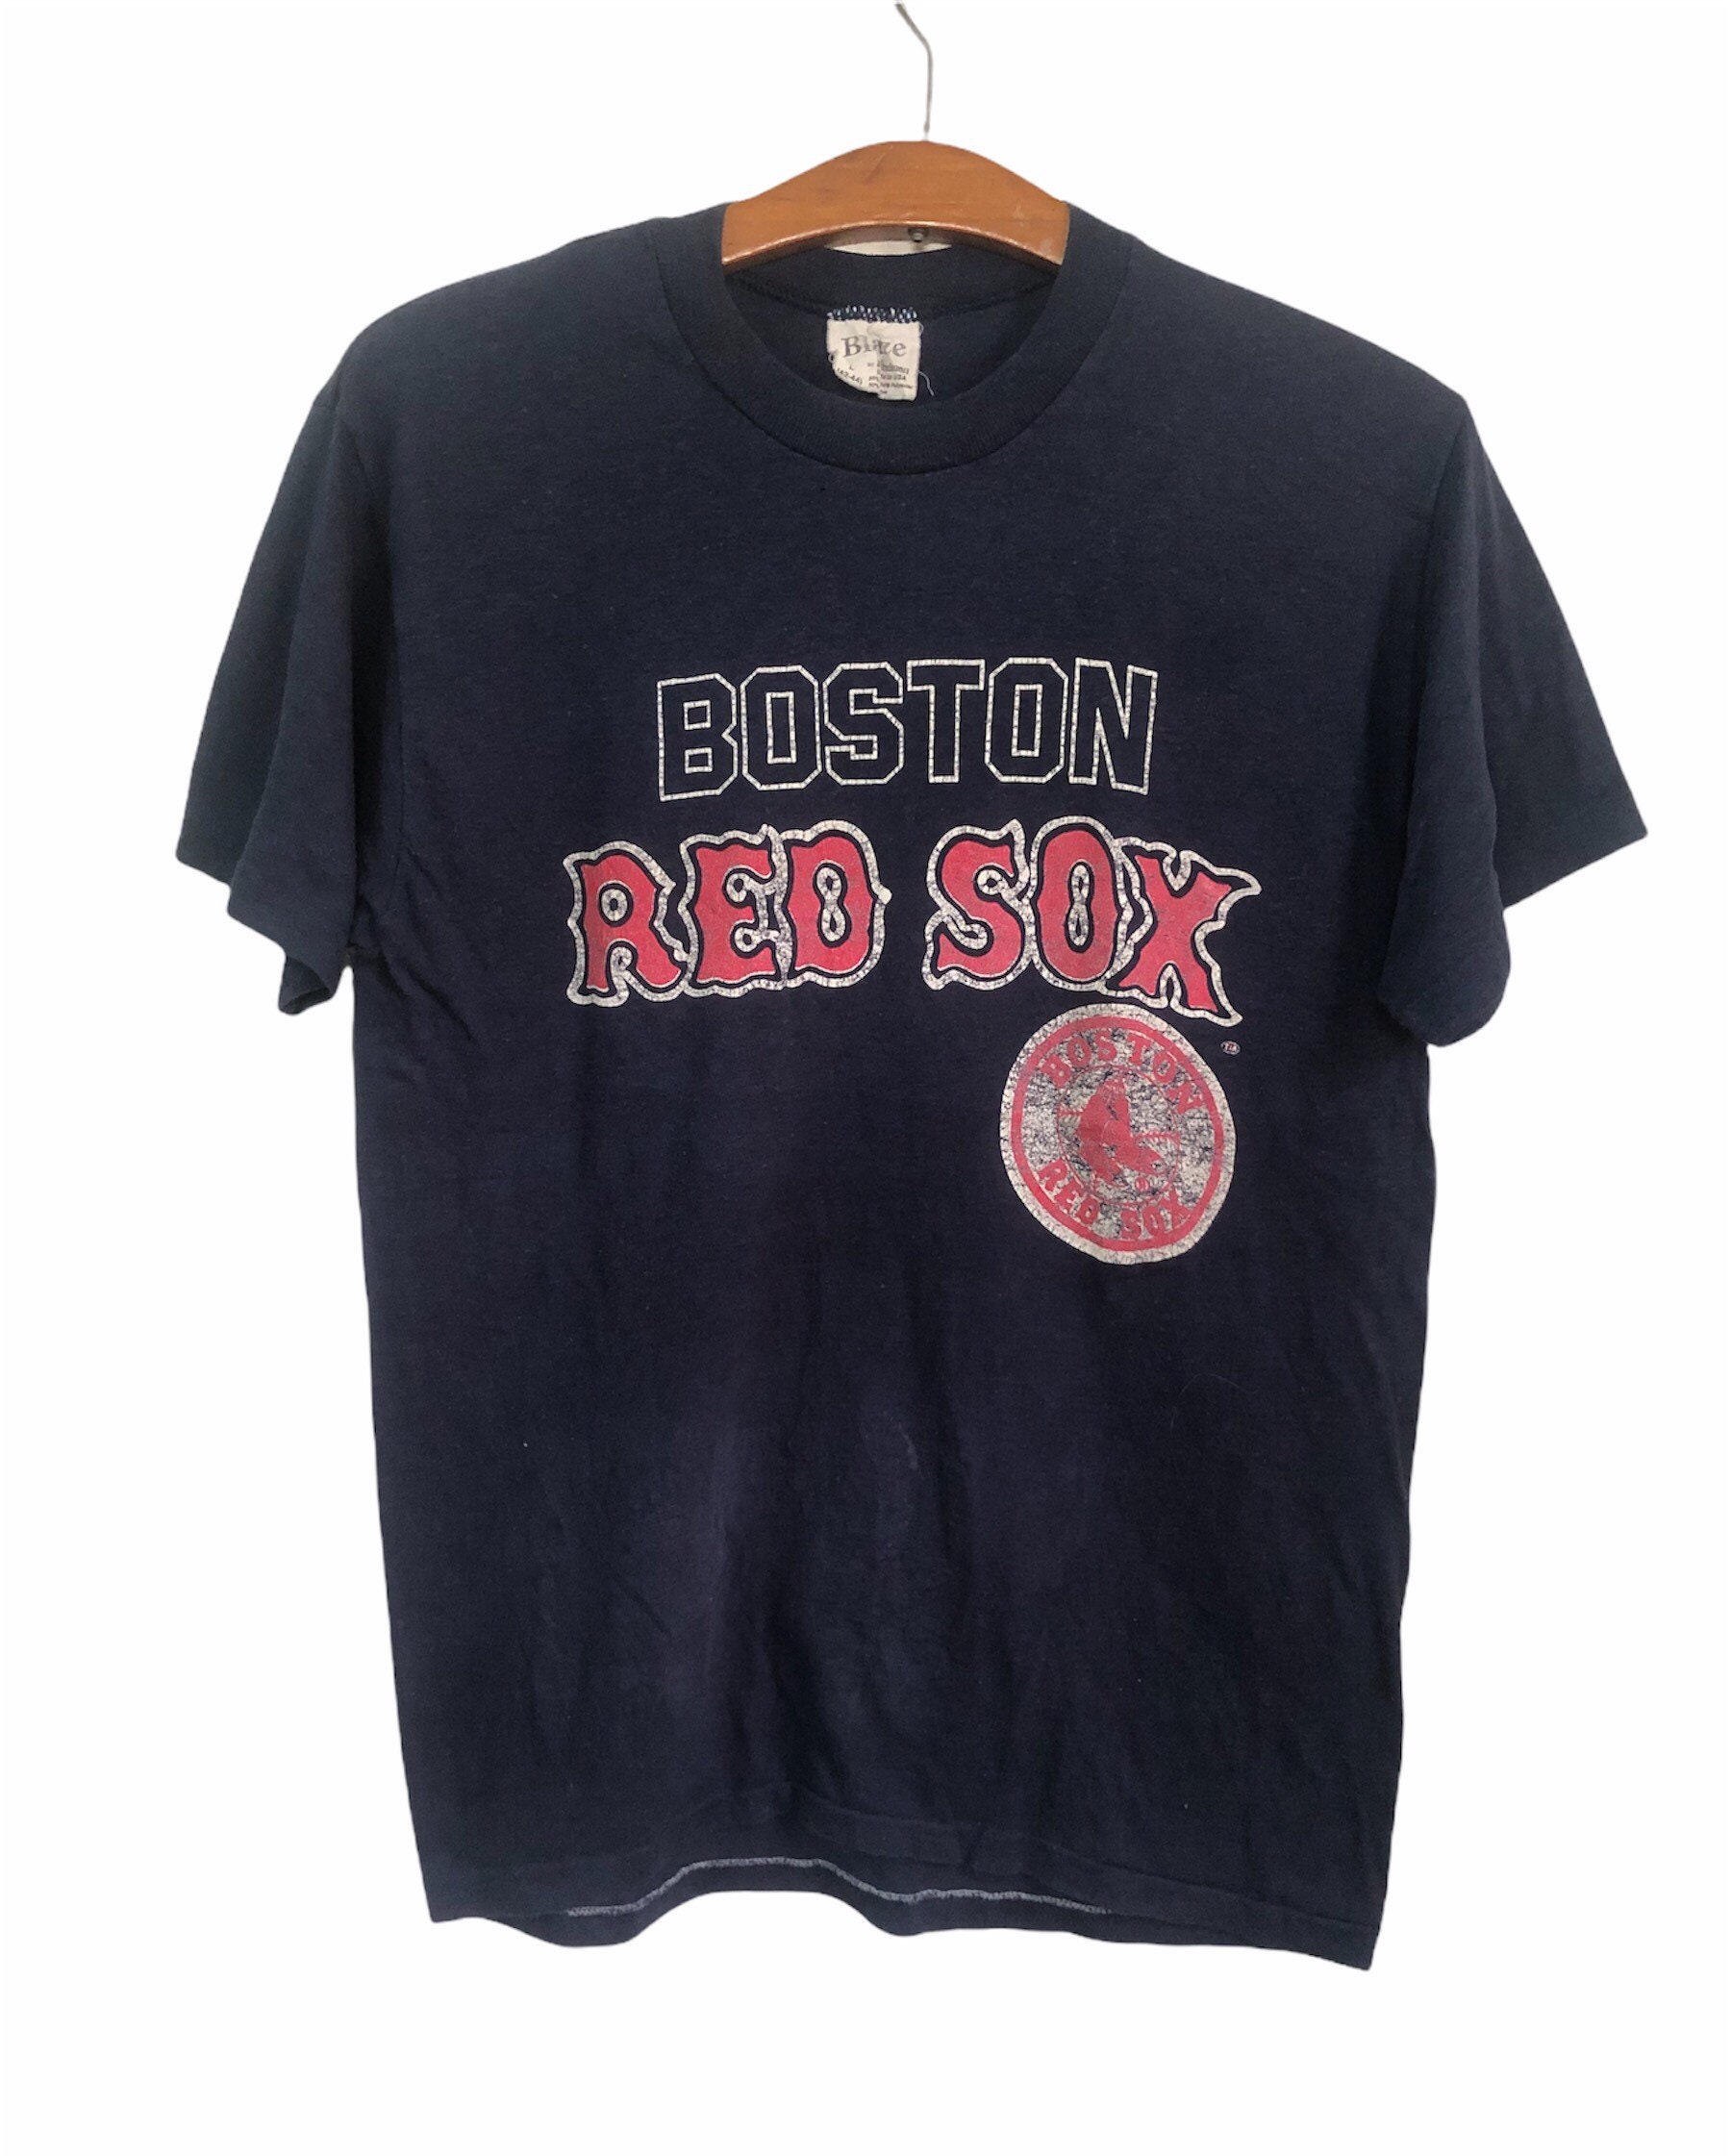 Vintage 80s 90s Boston Red Sox Baseball MLB T Shirt Large Size 